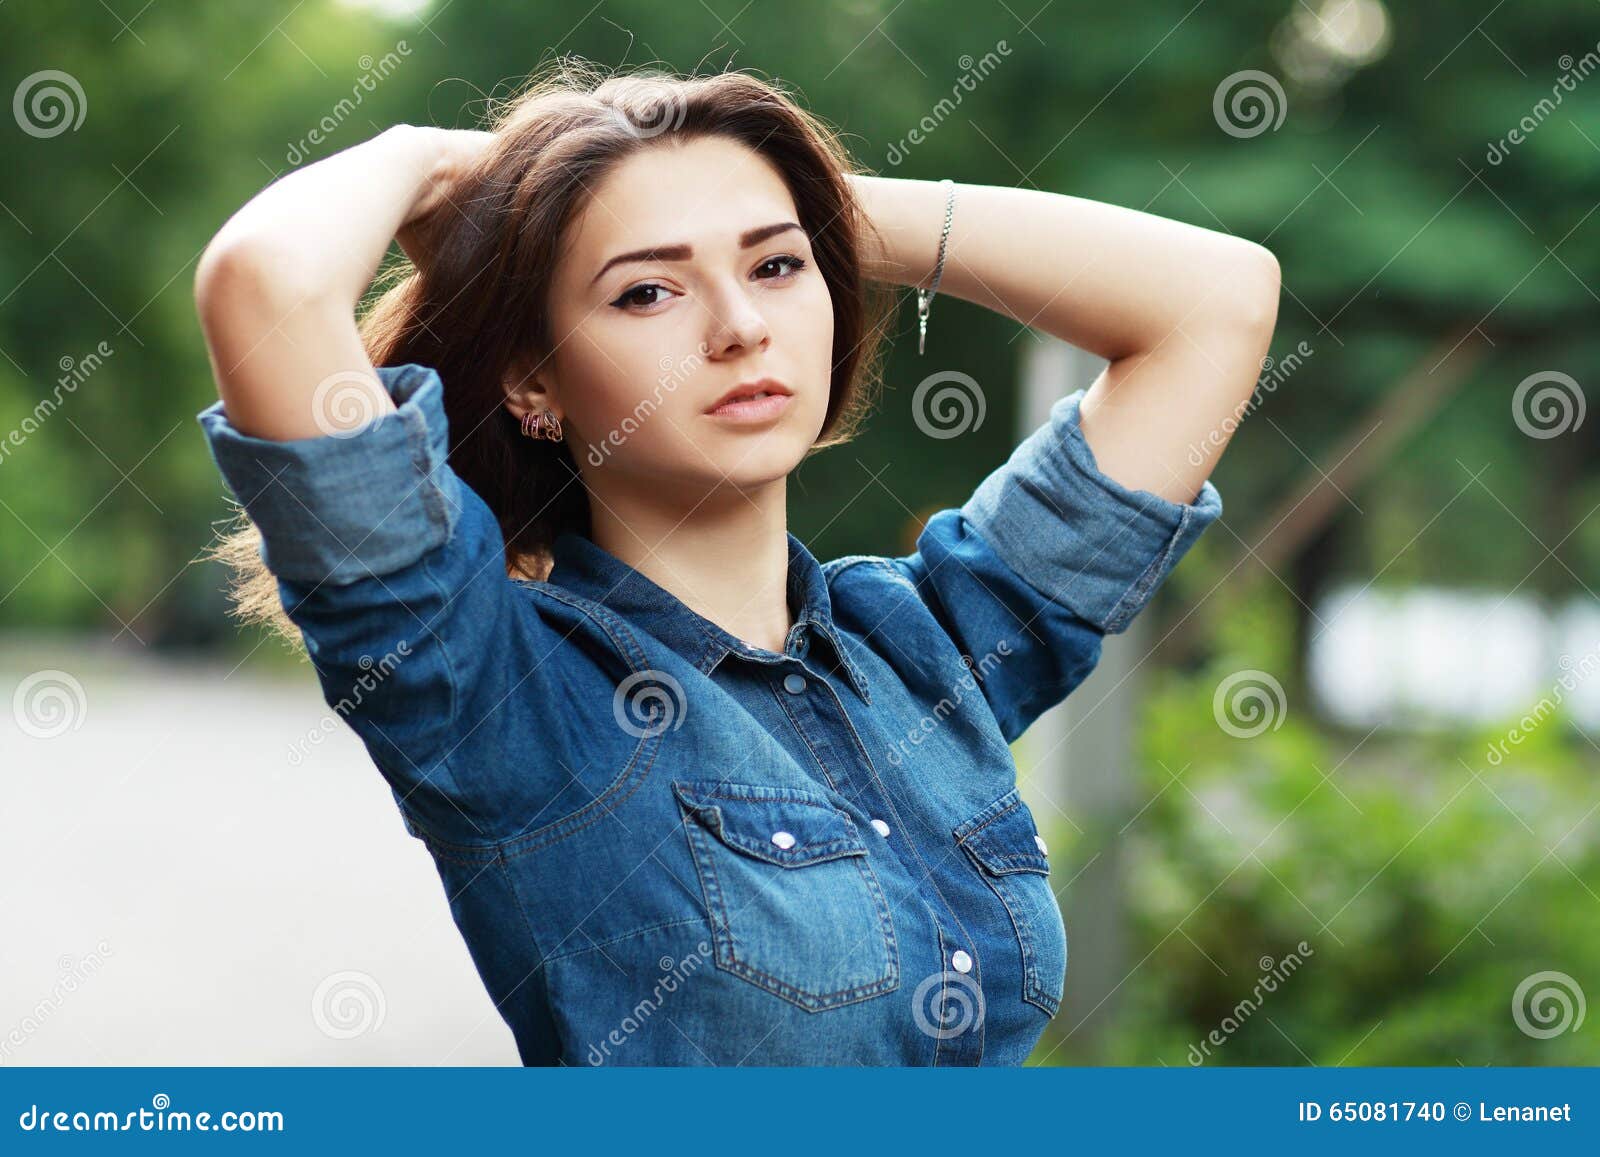 Young brunette teen outdoors